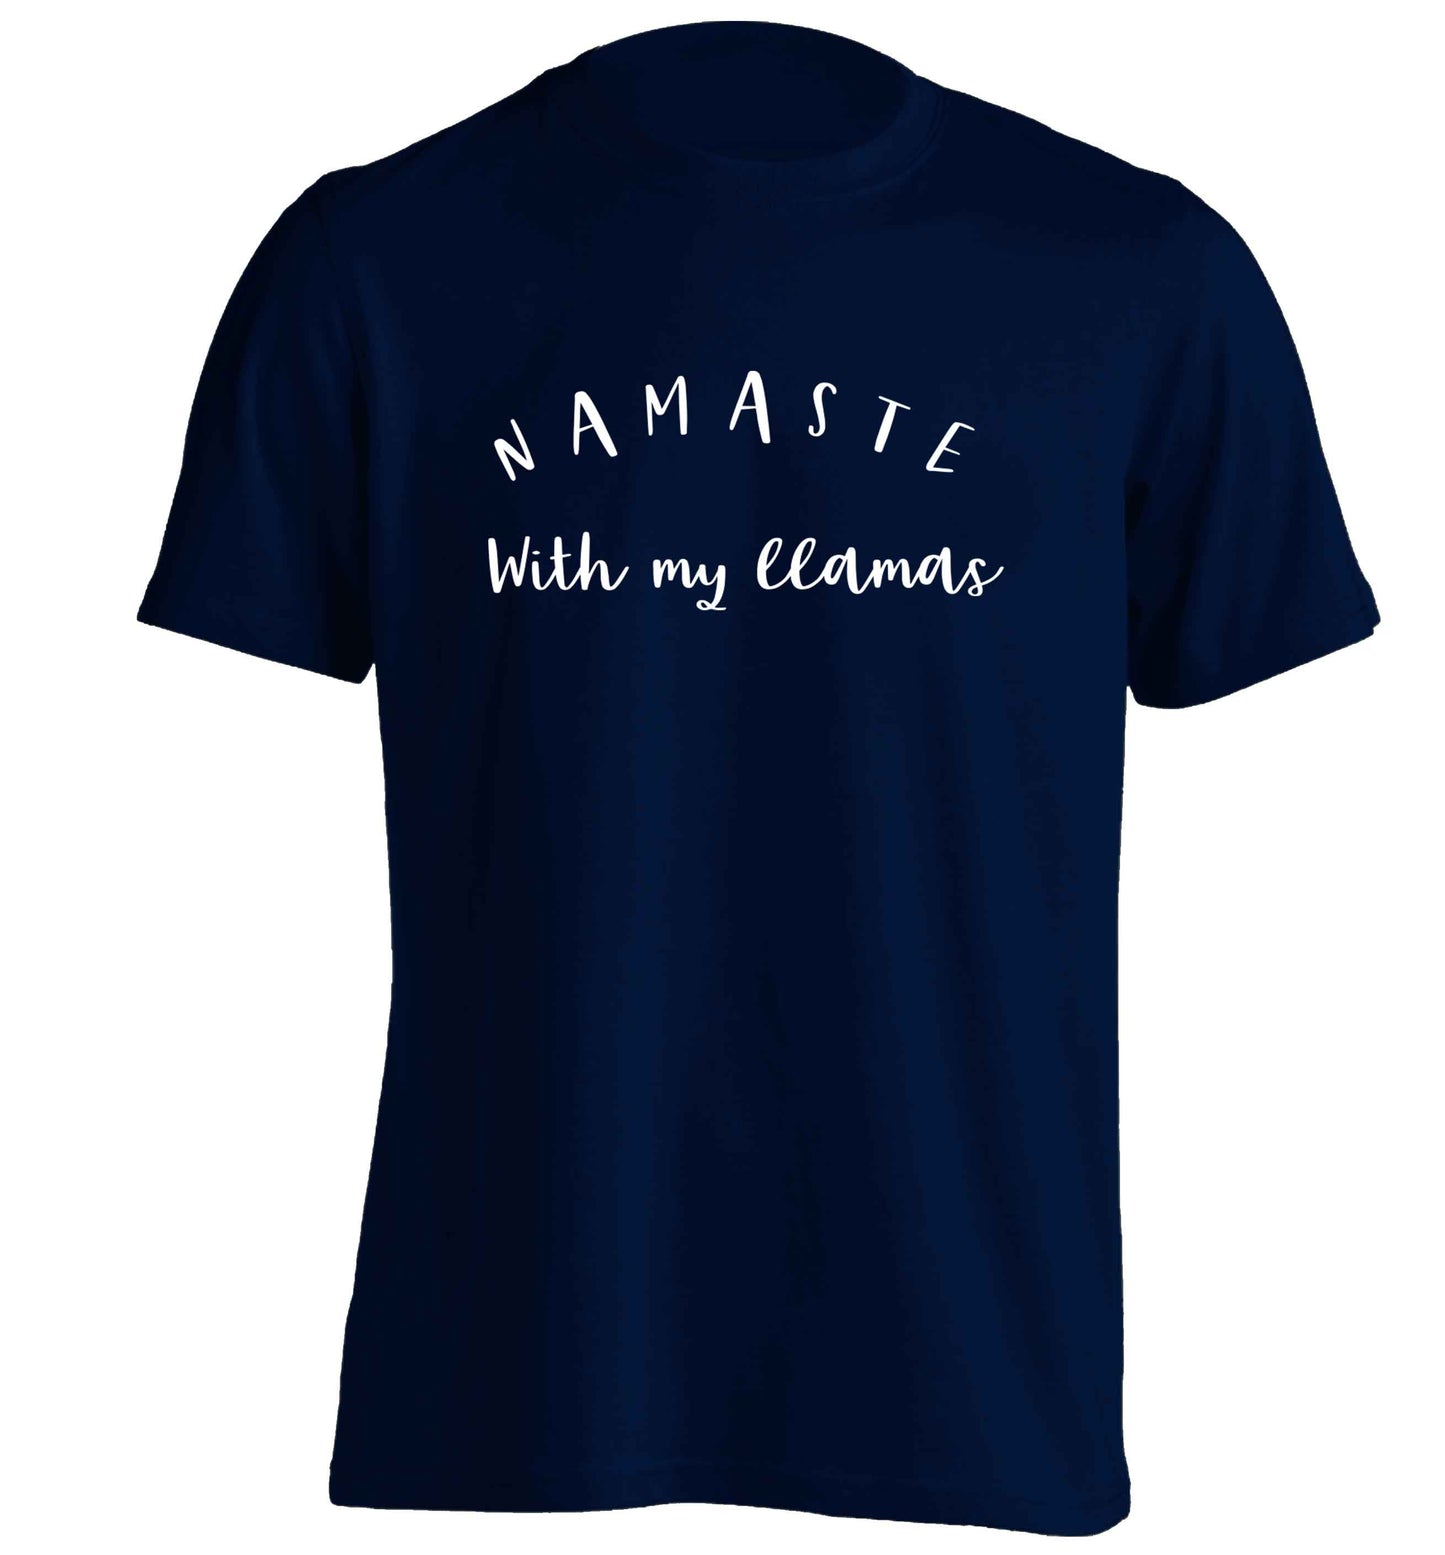 Namaste with my llamas adults unisex navy Tshirt 2XL